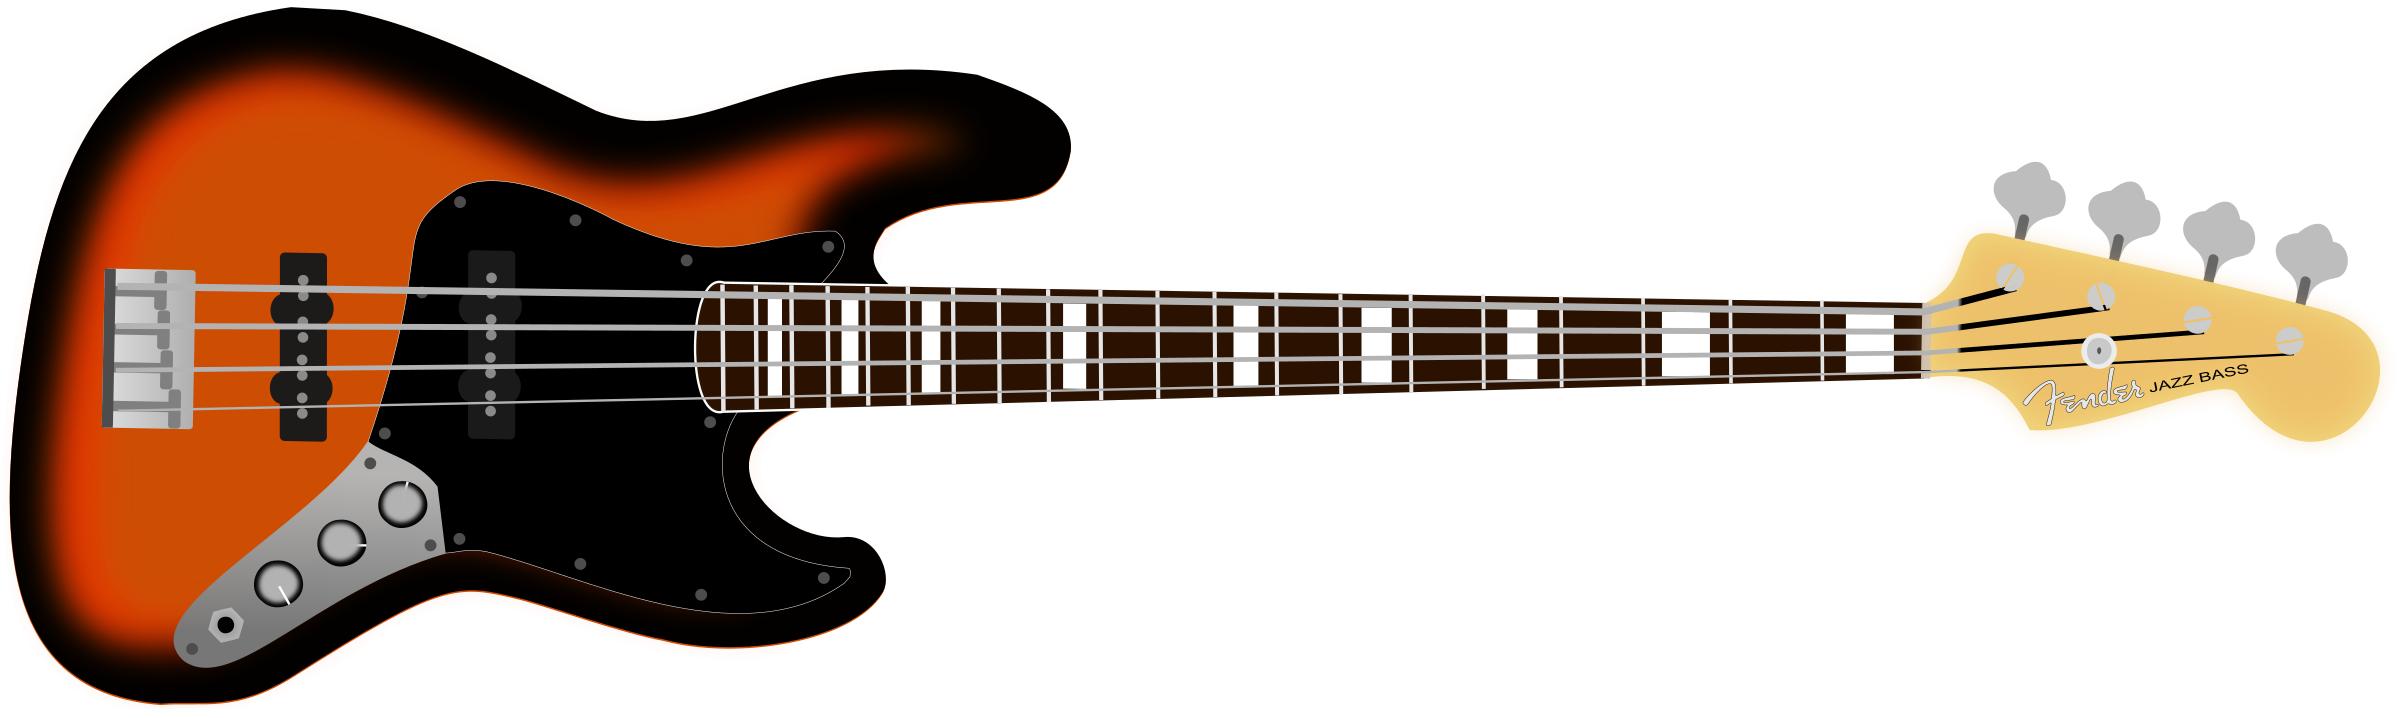 Fender Jazz Bass Classic 70 png